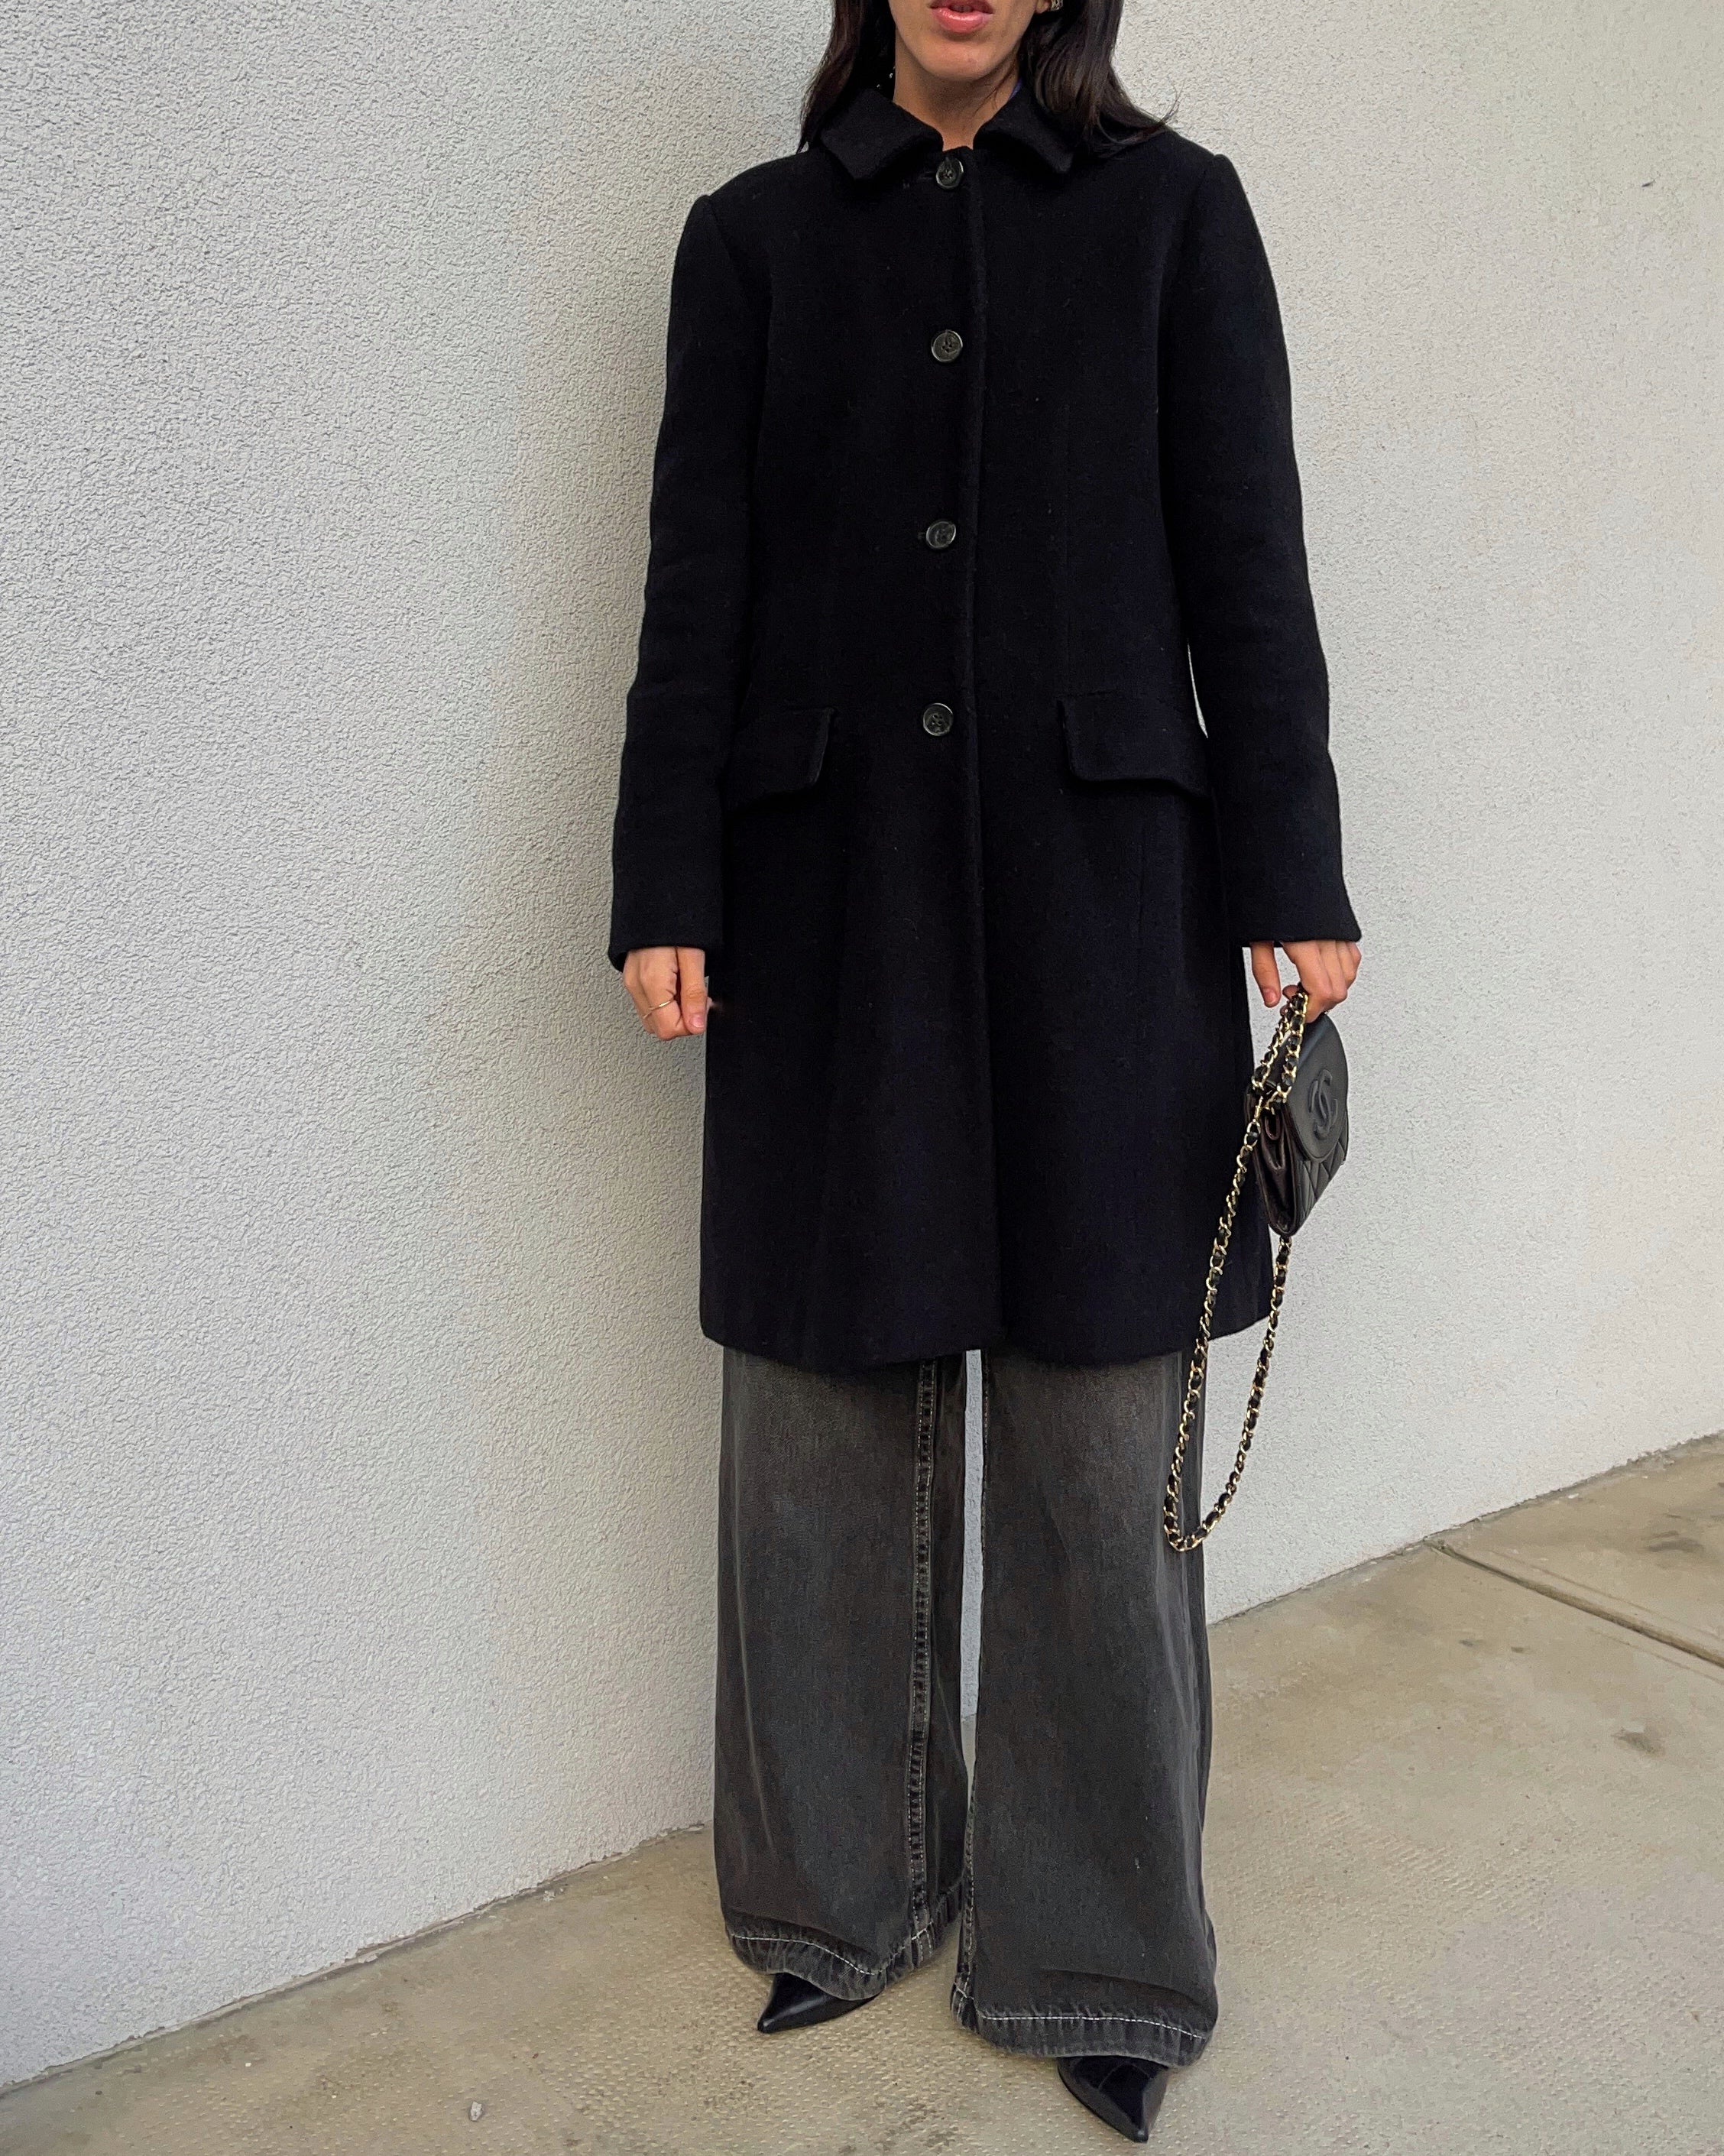 Max & co vintage coat